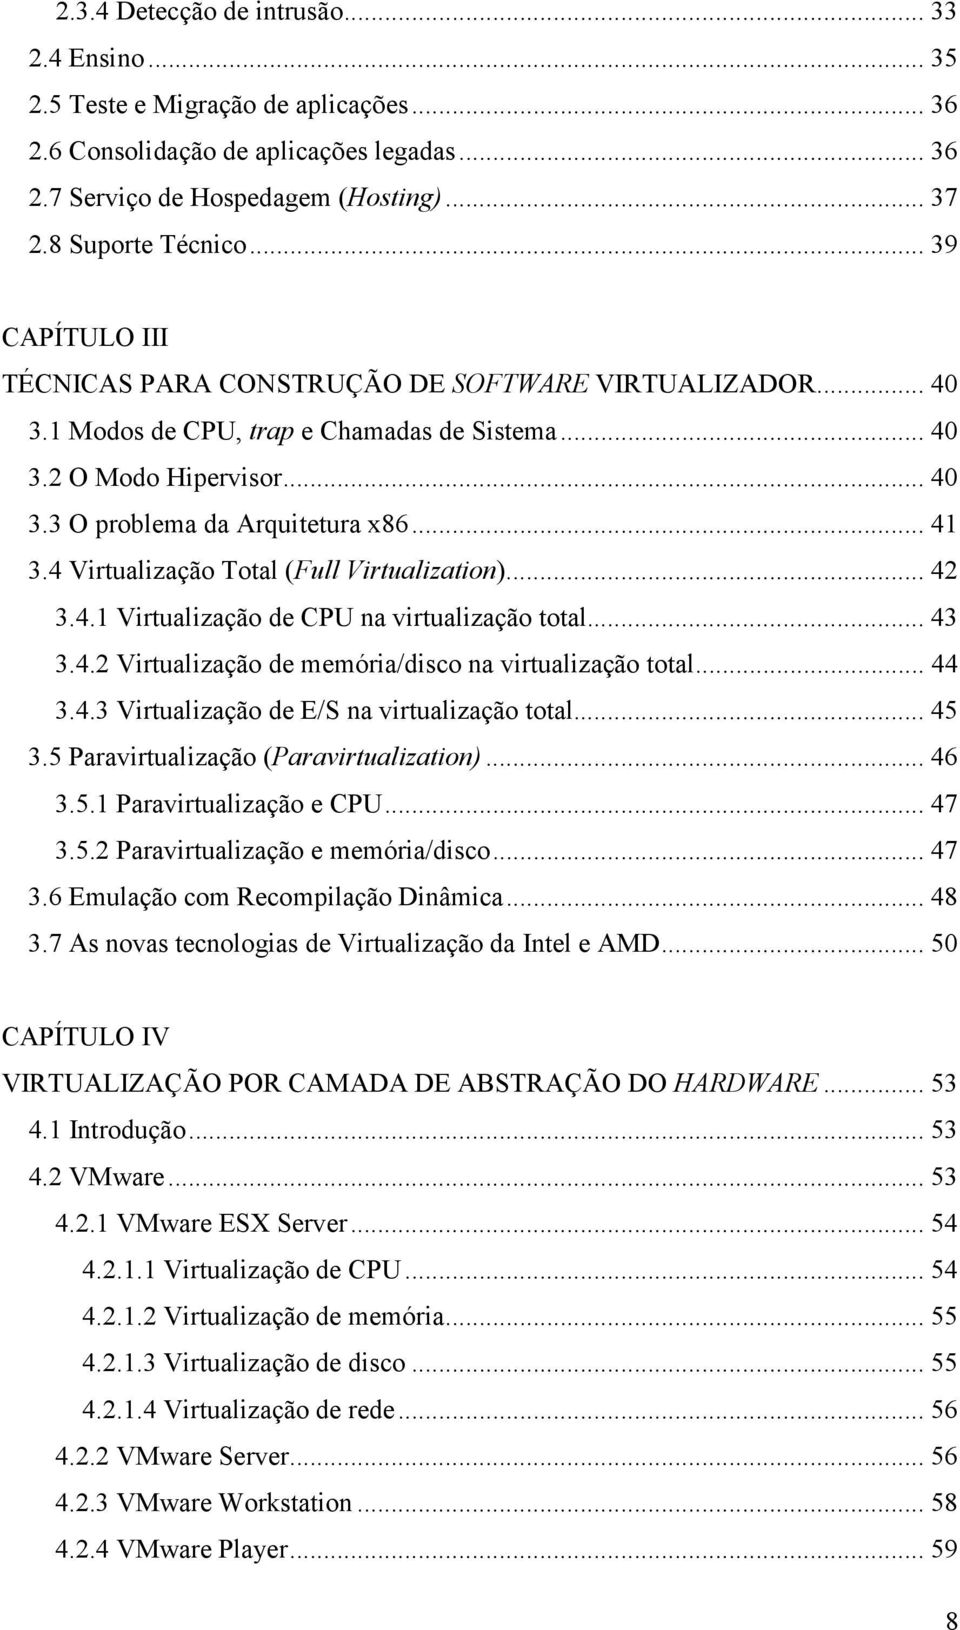 4 Virtualização Total (Full Virtualization)... 42 3.4.1 Virtualização de CPU na virtualização total... 43 3.4.2 Virtualização de memória/disco na virtualização total... 44 3.4.3 Virtualização de E/S na virtualização total.